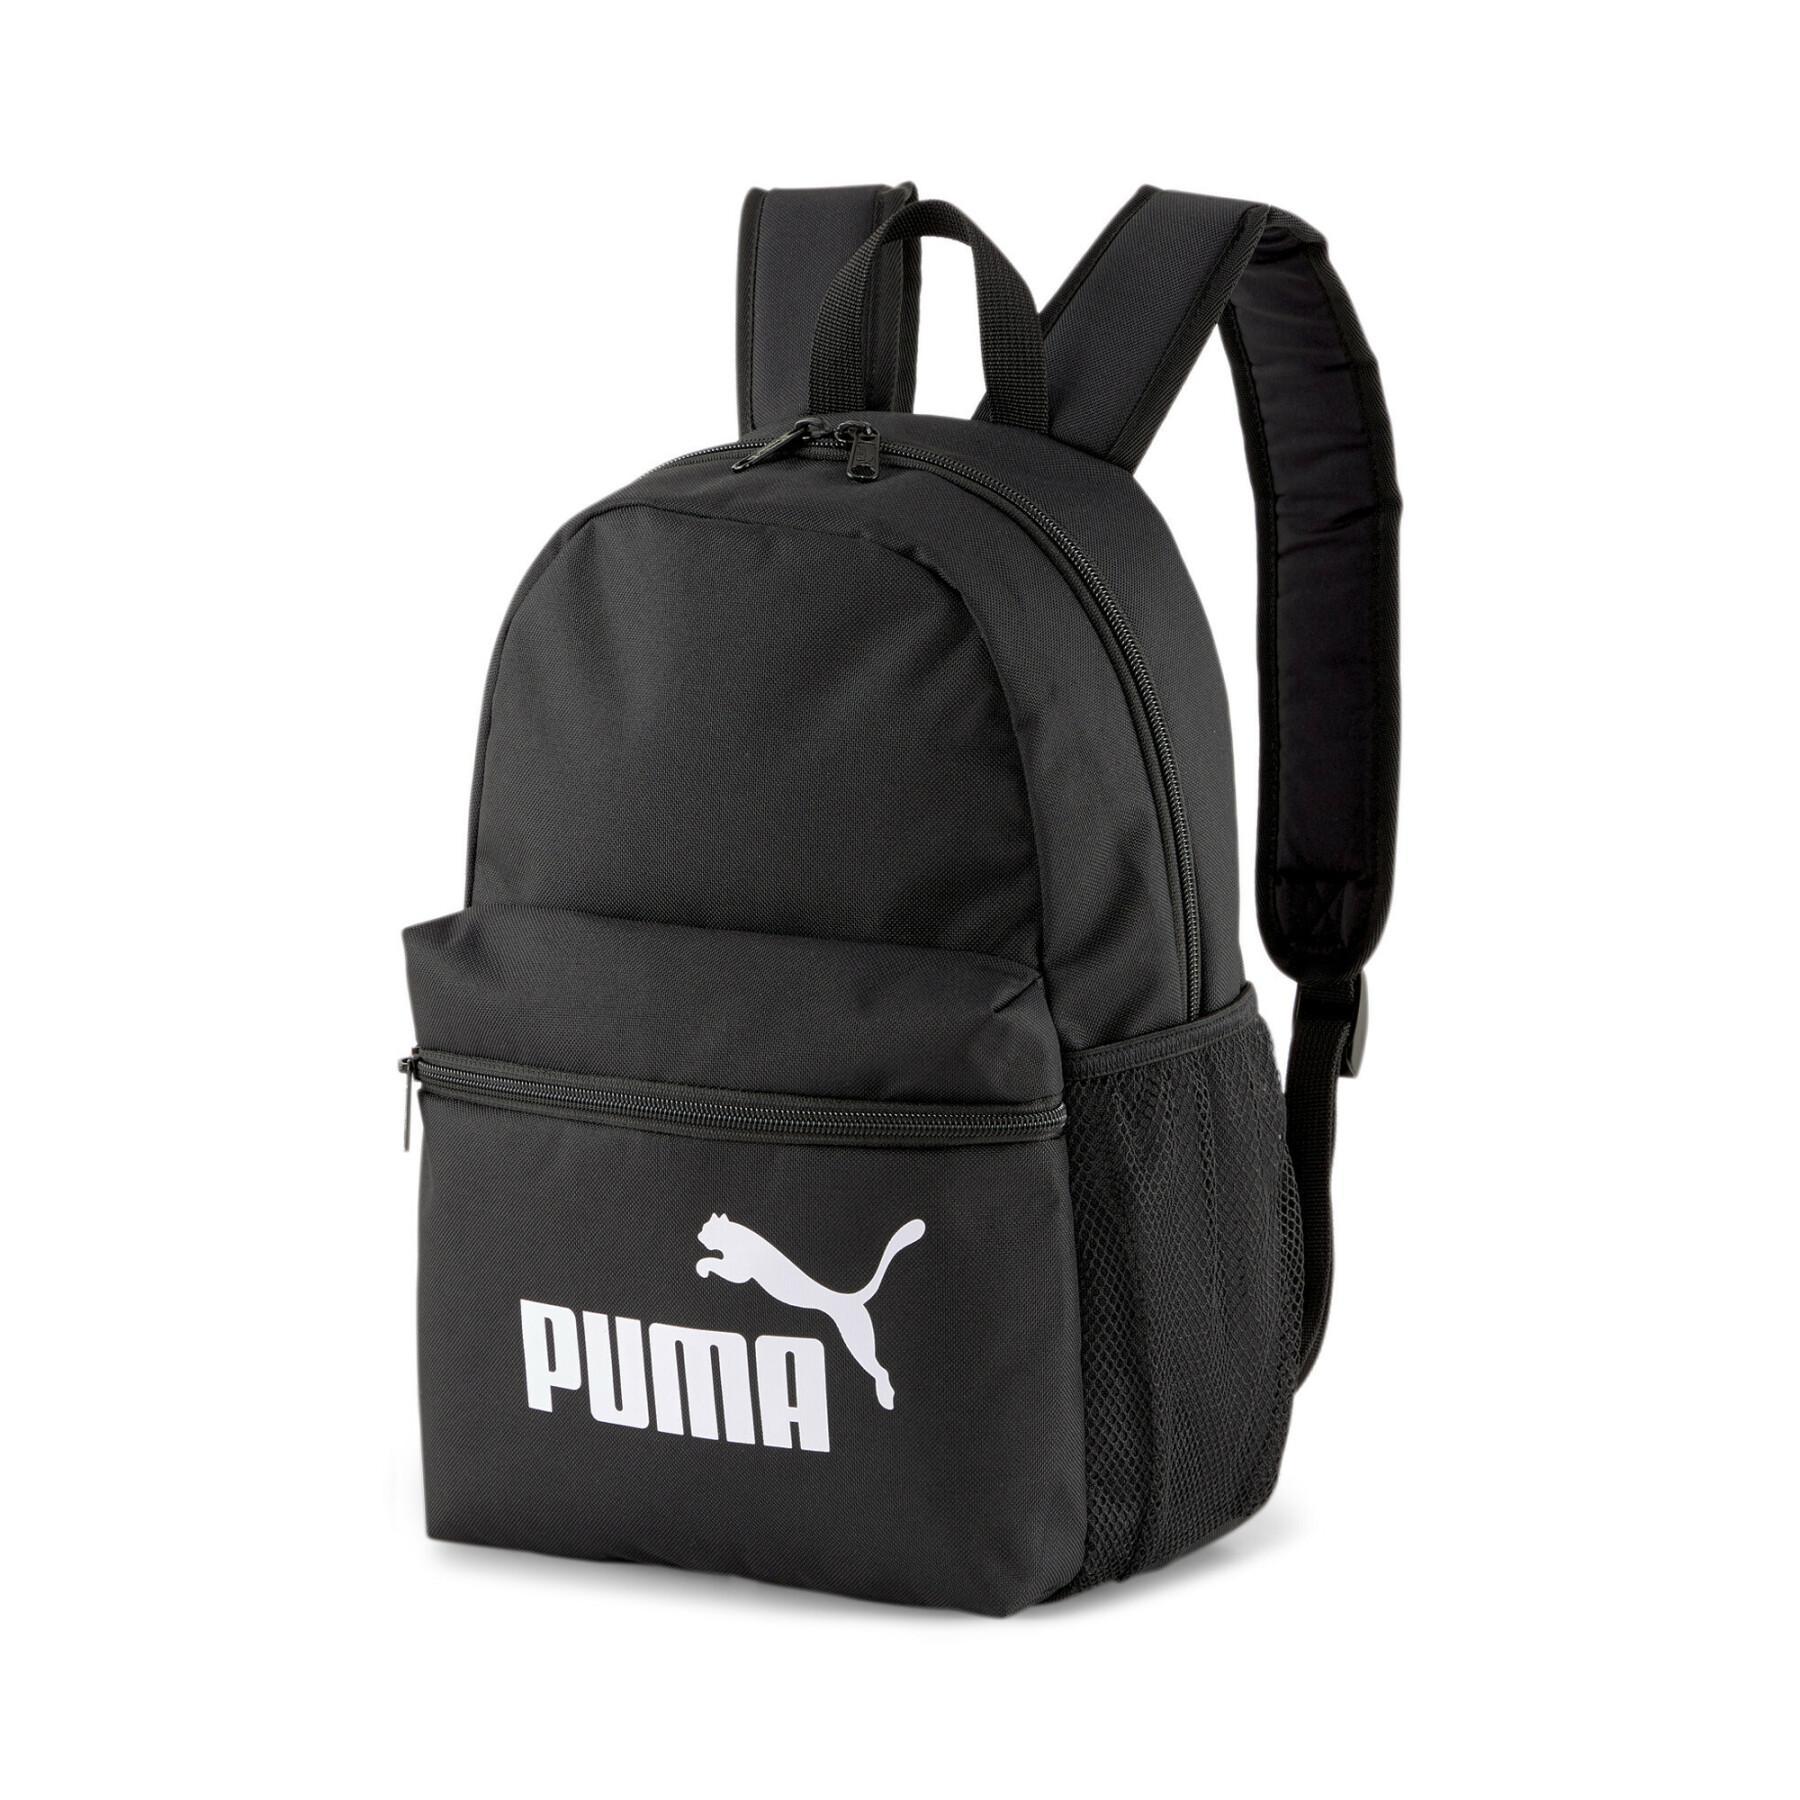 Children's backpack Puma Phase